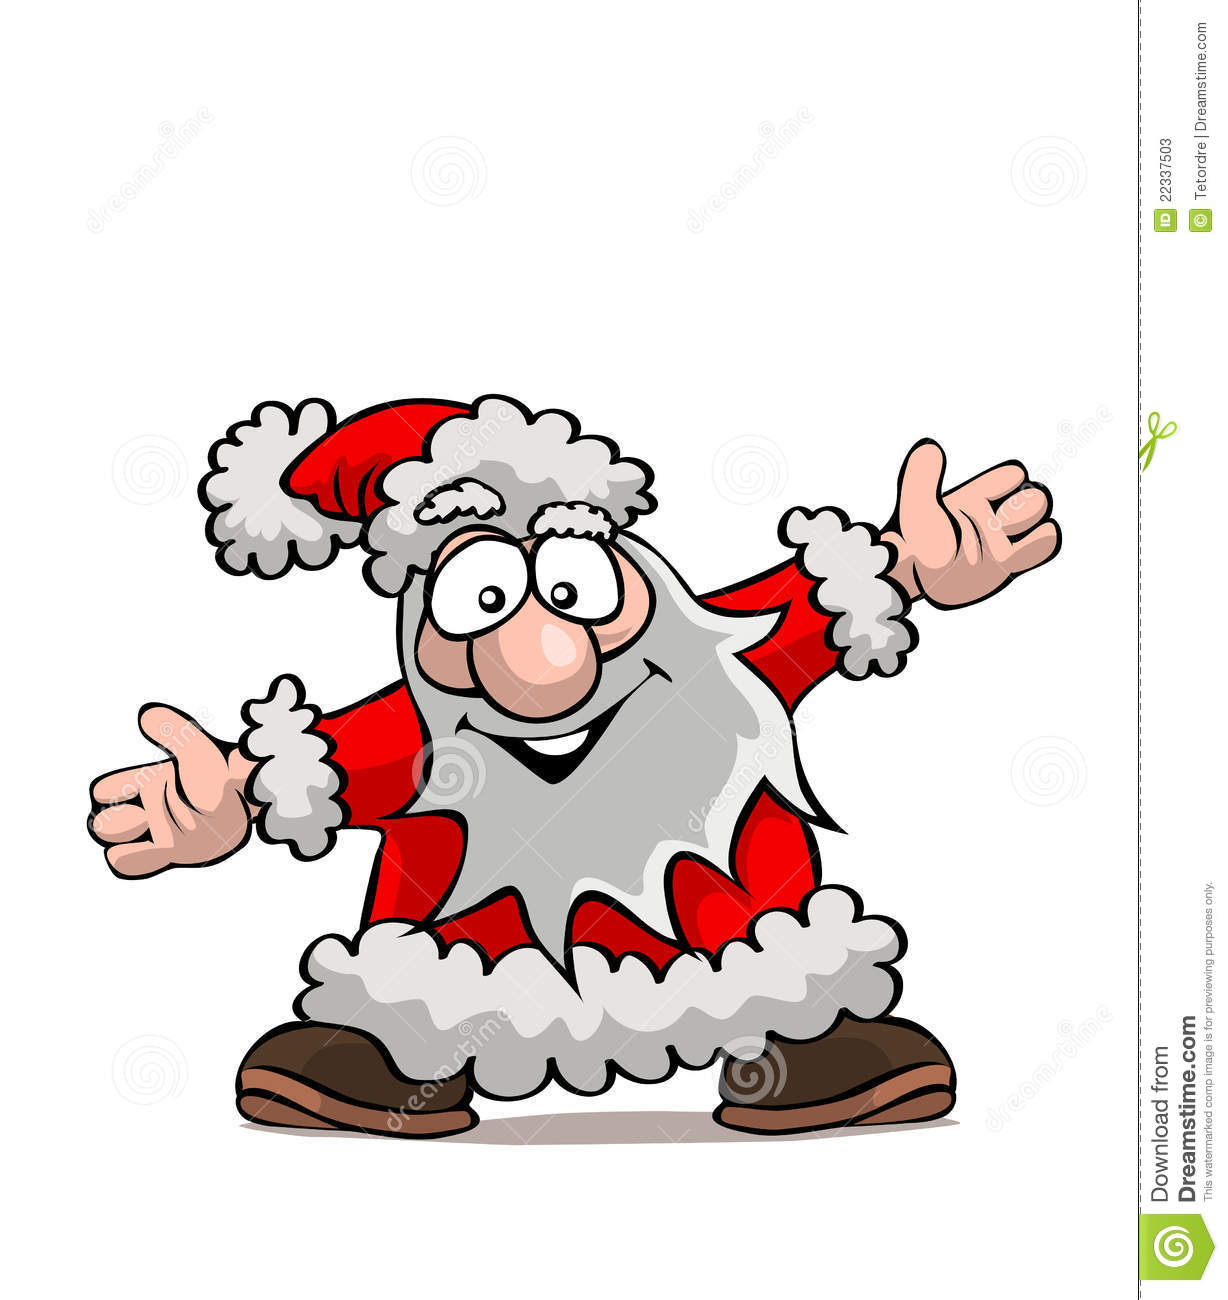 Santa Smiling Funny Cartoon Image